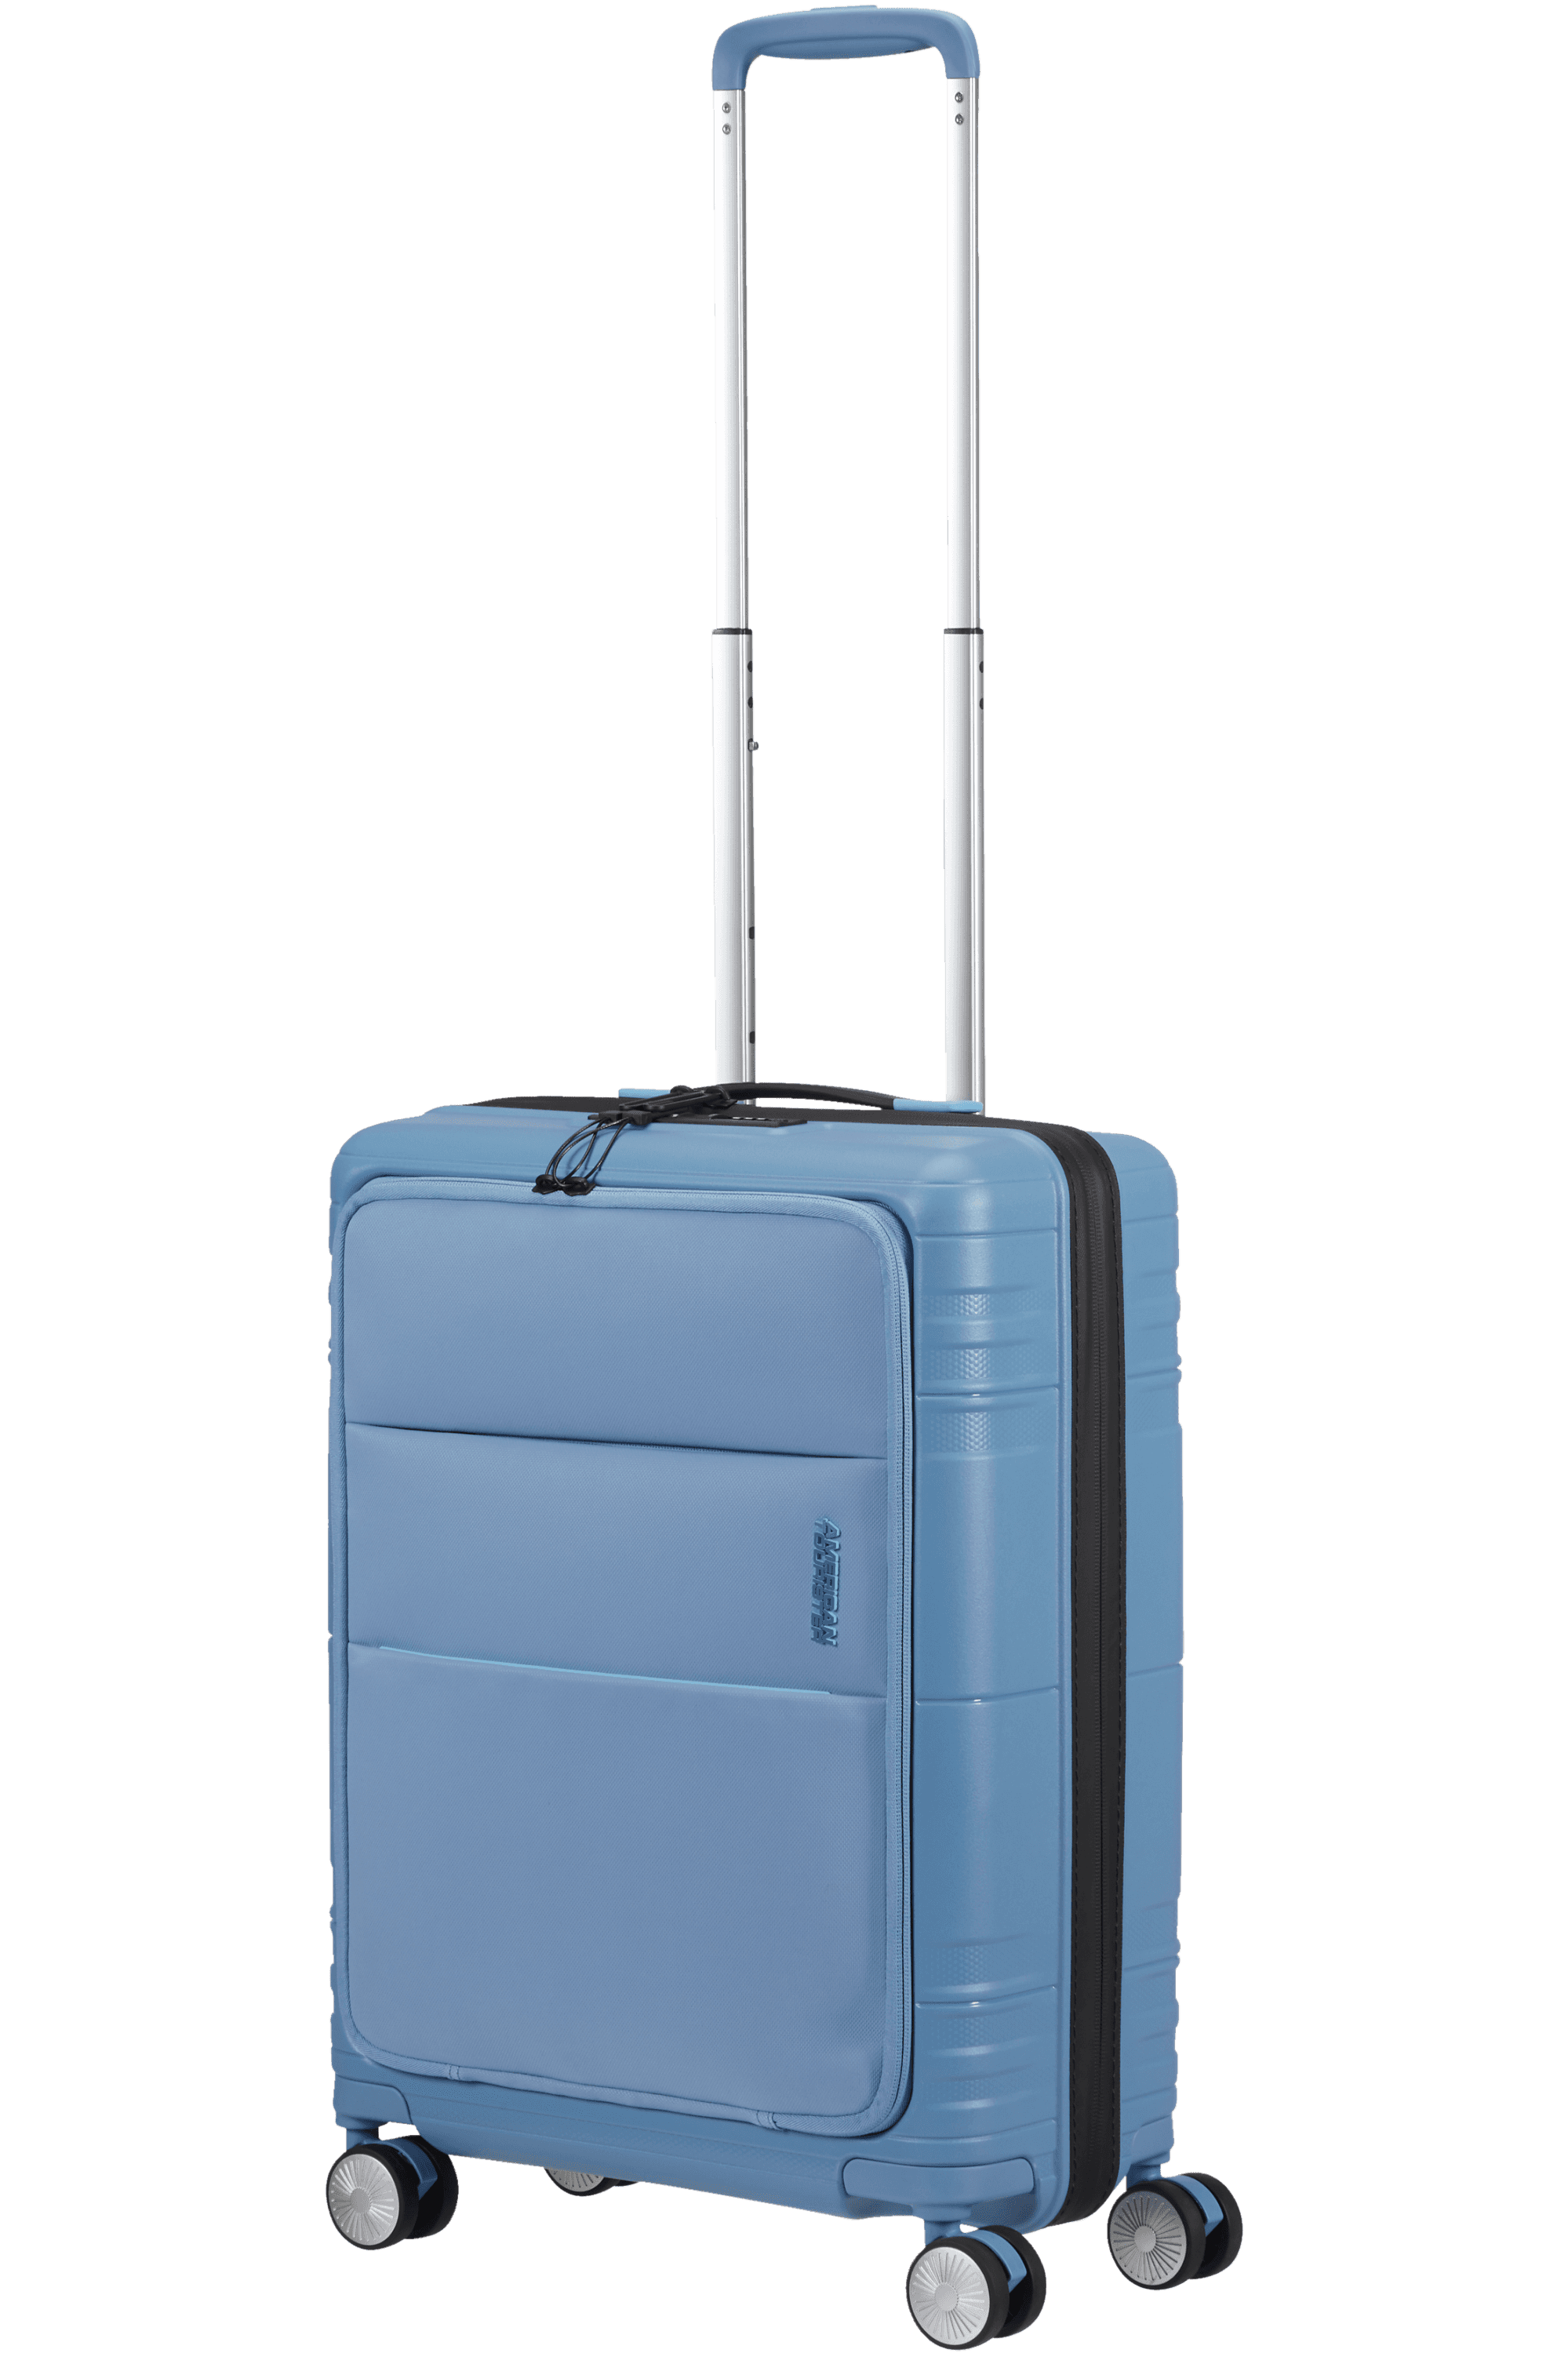 Bon Air Dlx 55cm Cabin luggage | American Tourister Ireland